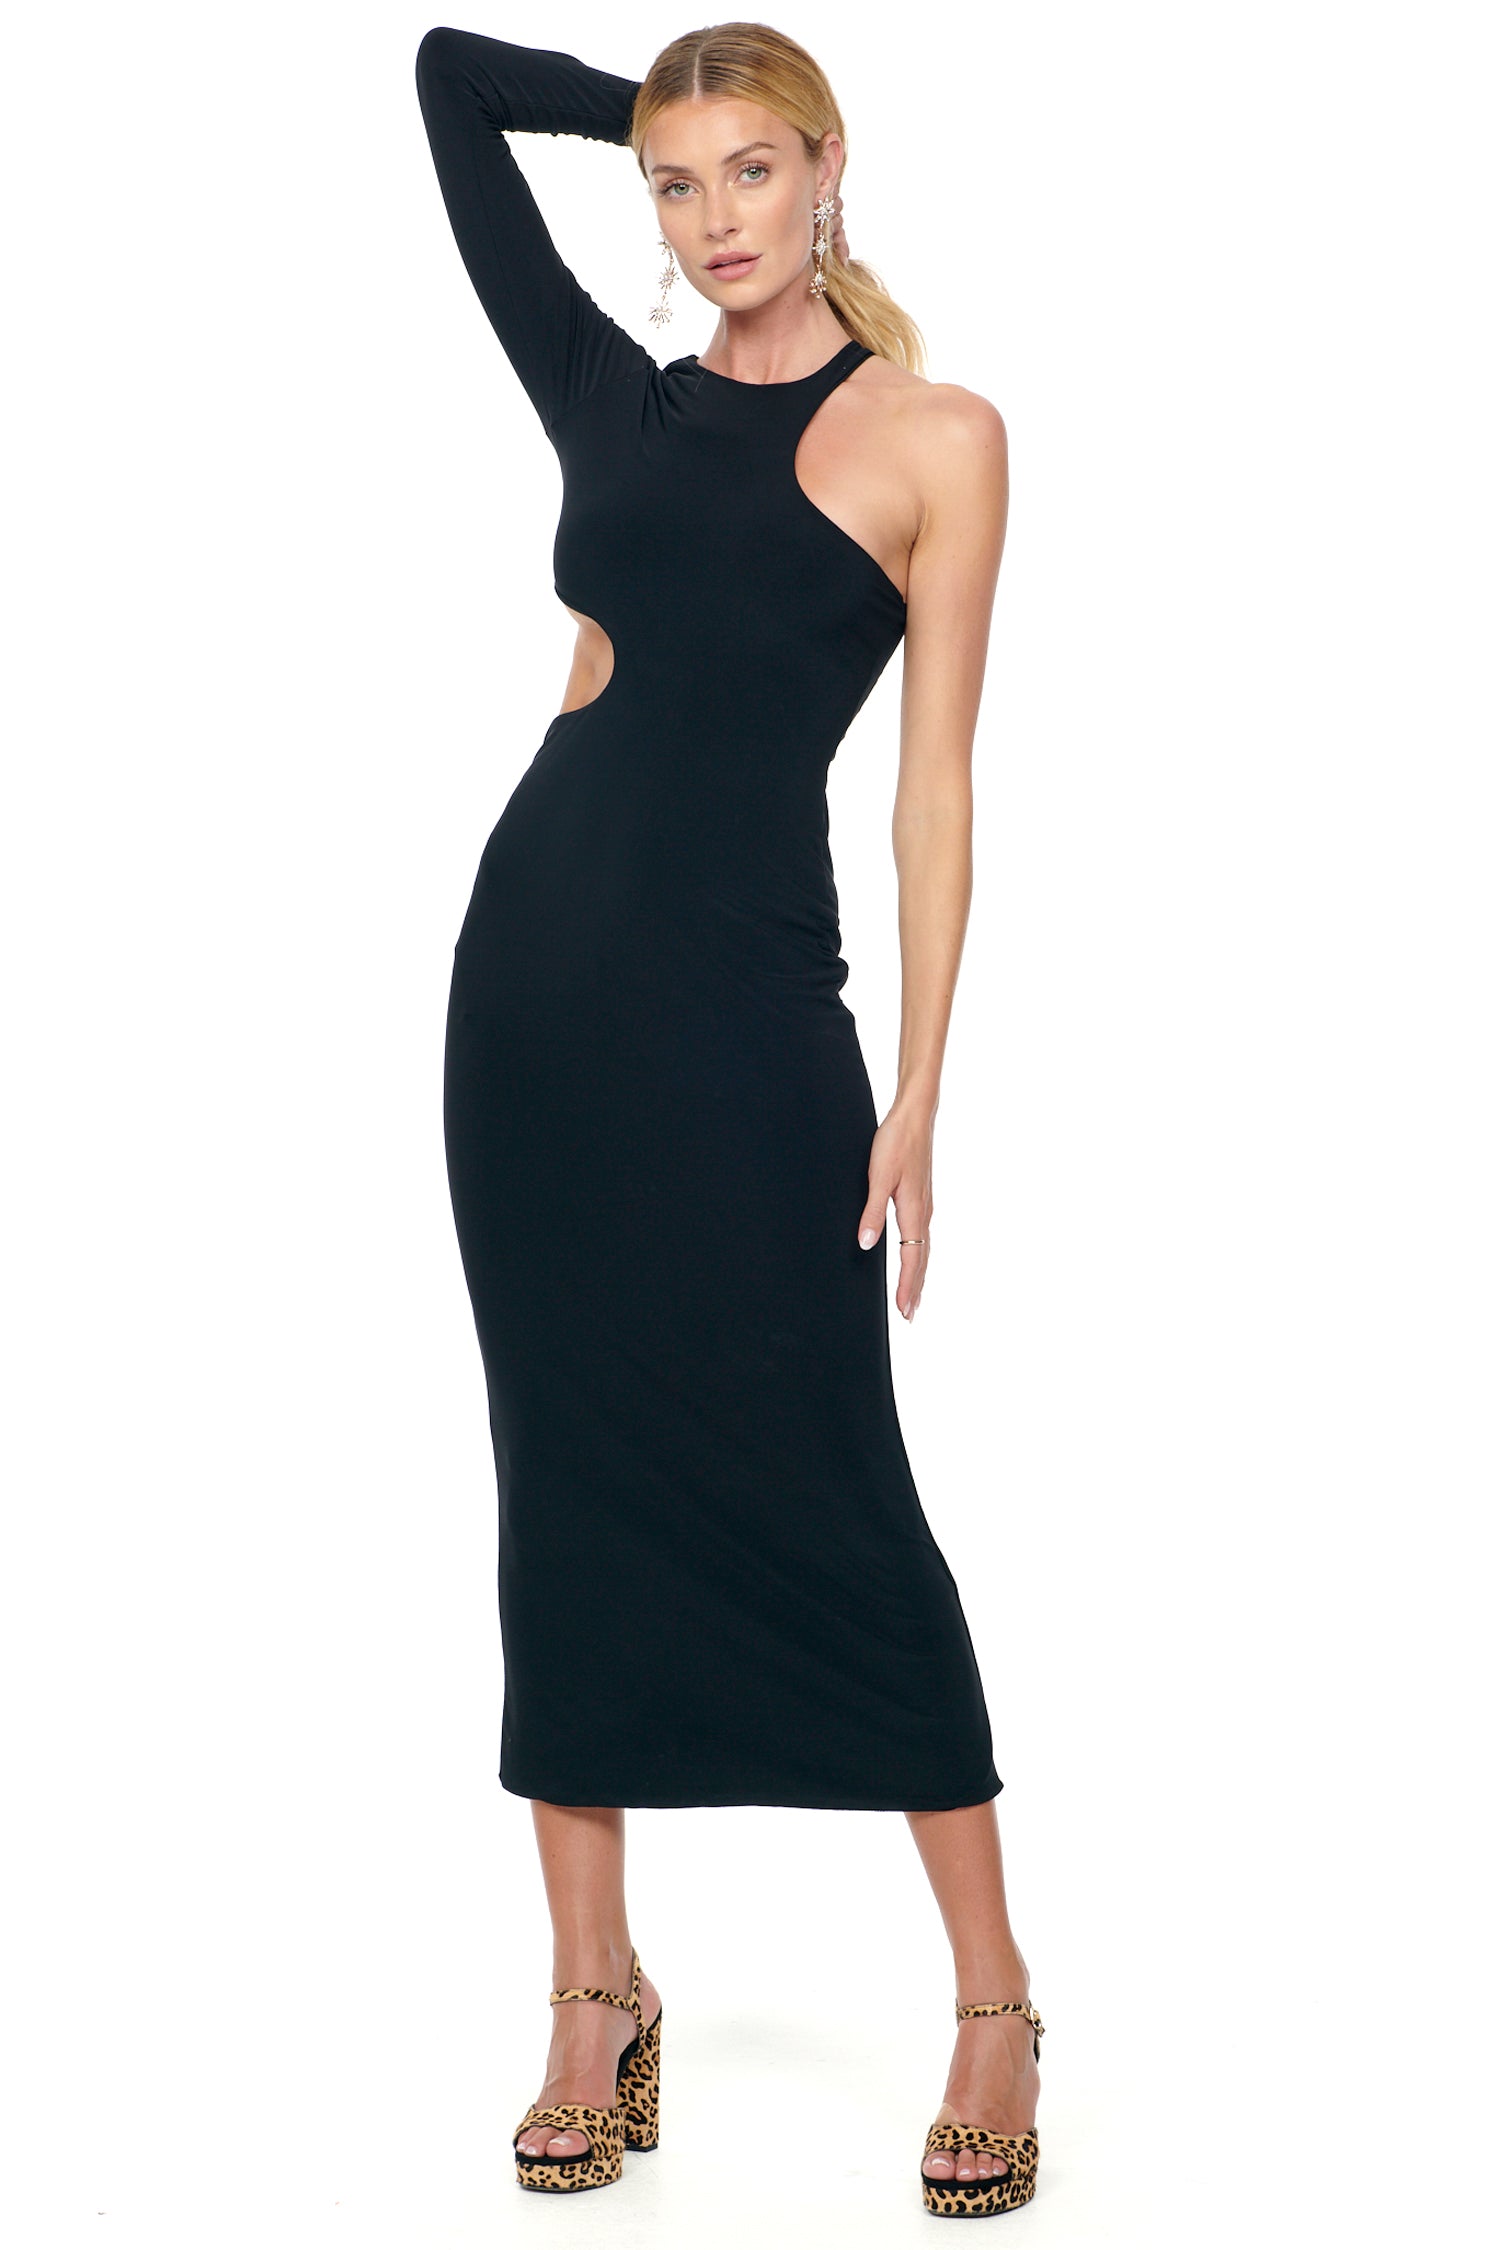 Model wearing Black Midi Gigi Cut Out Dress standing facing the camera